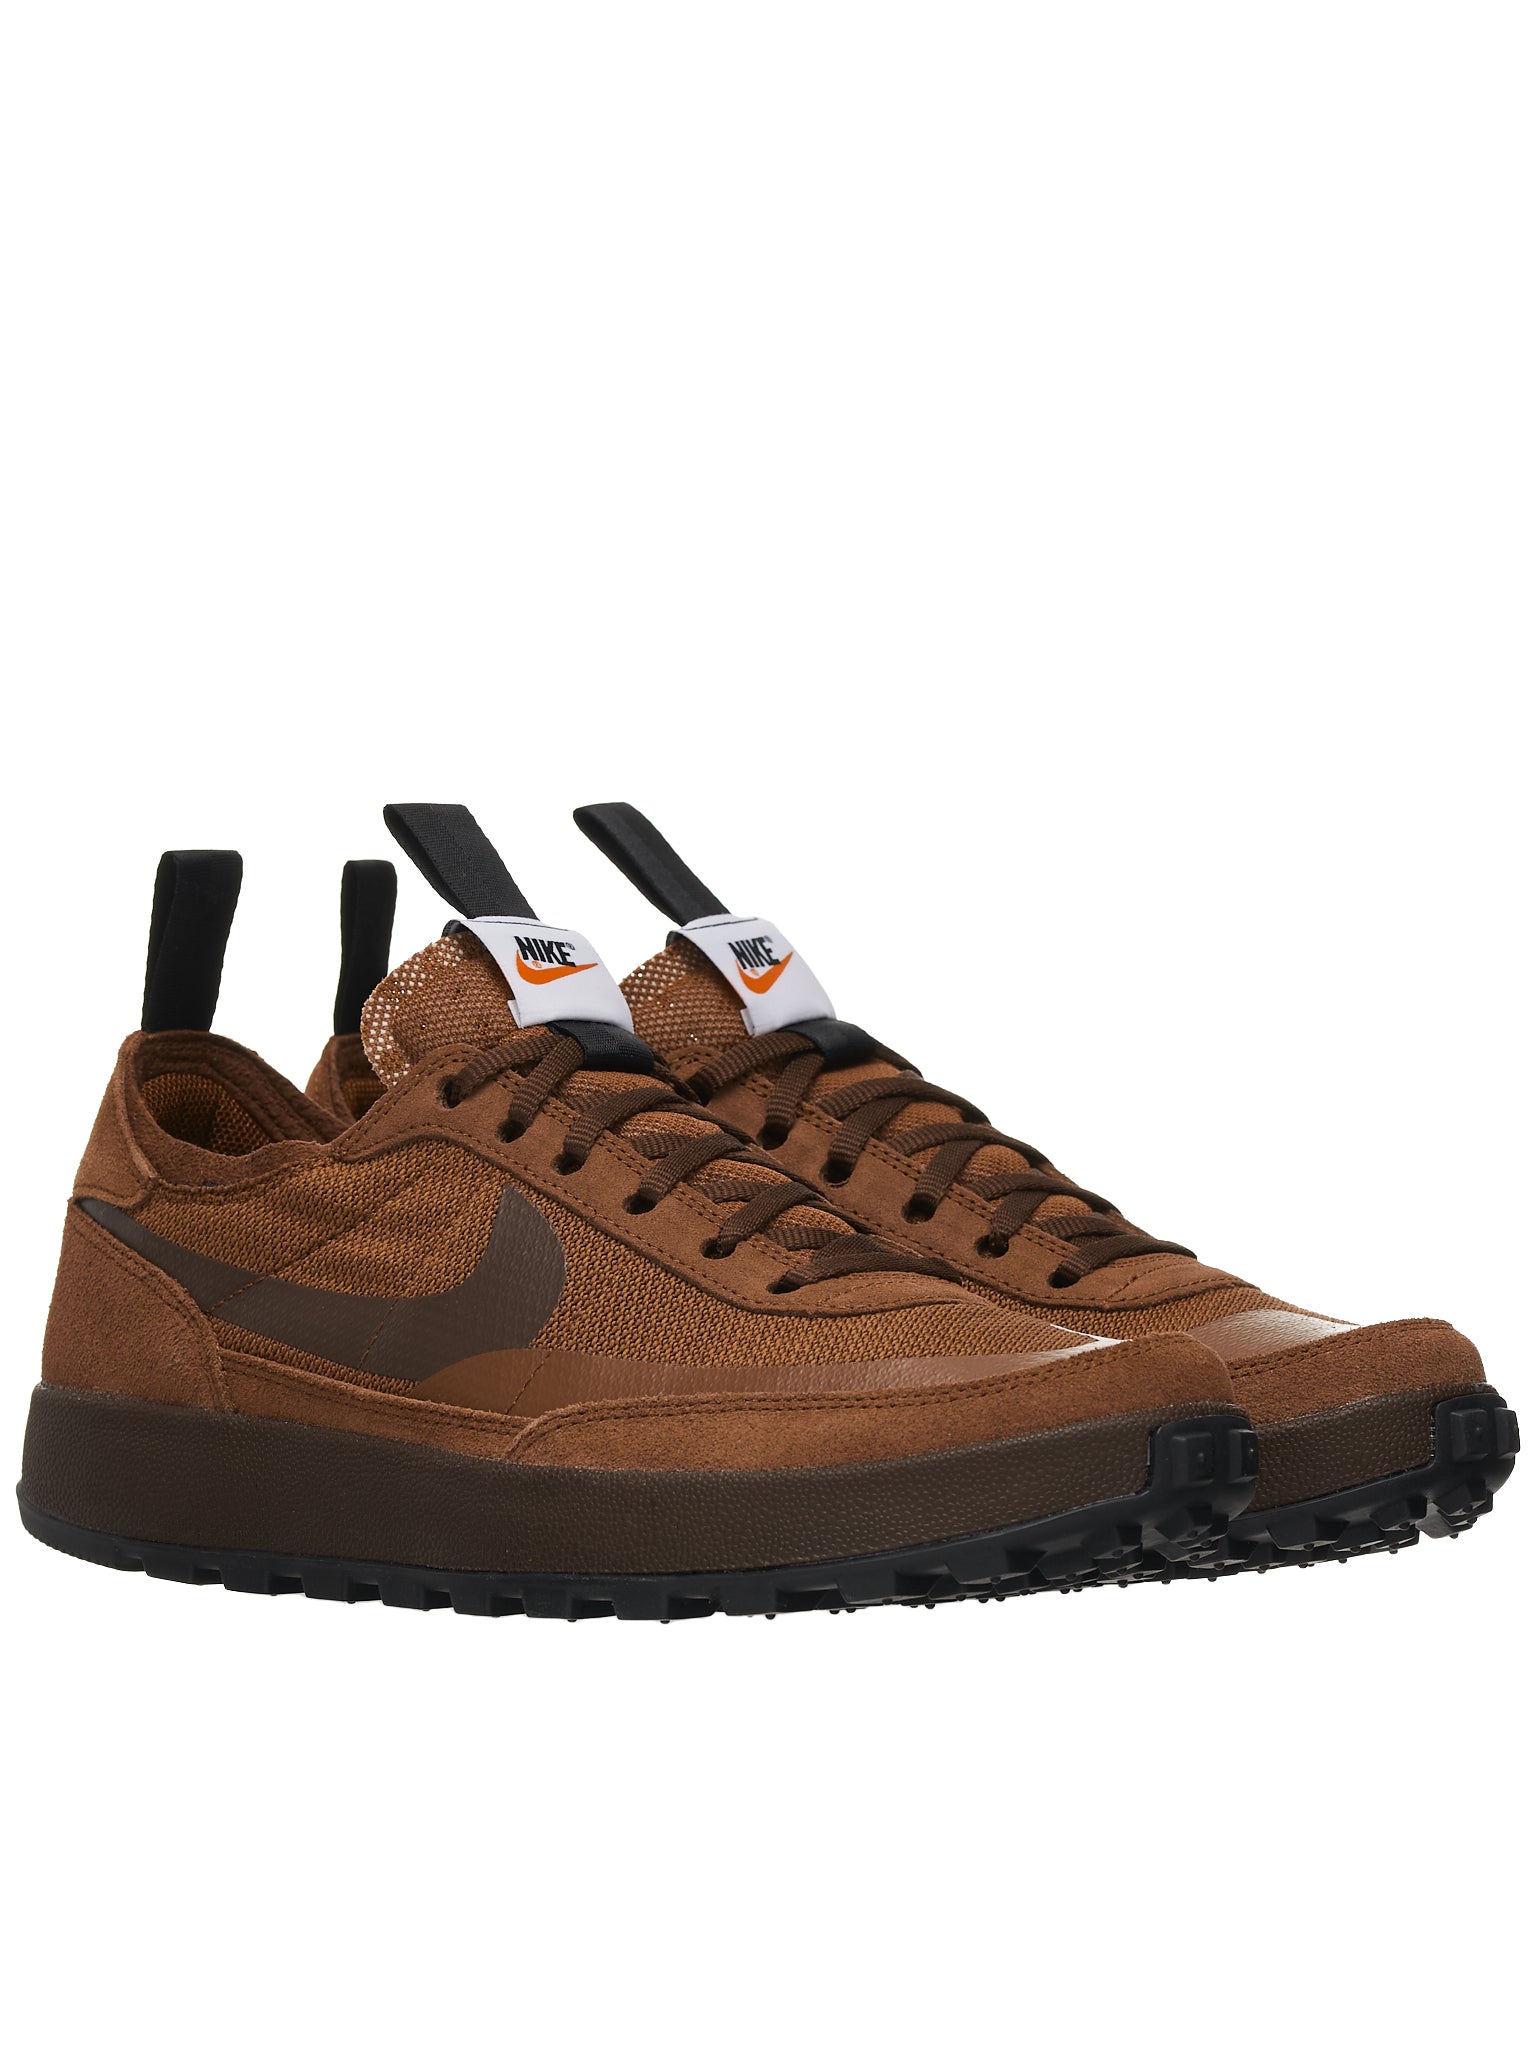 Nike Tom Sachs General Purpose Sneaker in Brown